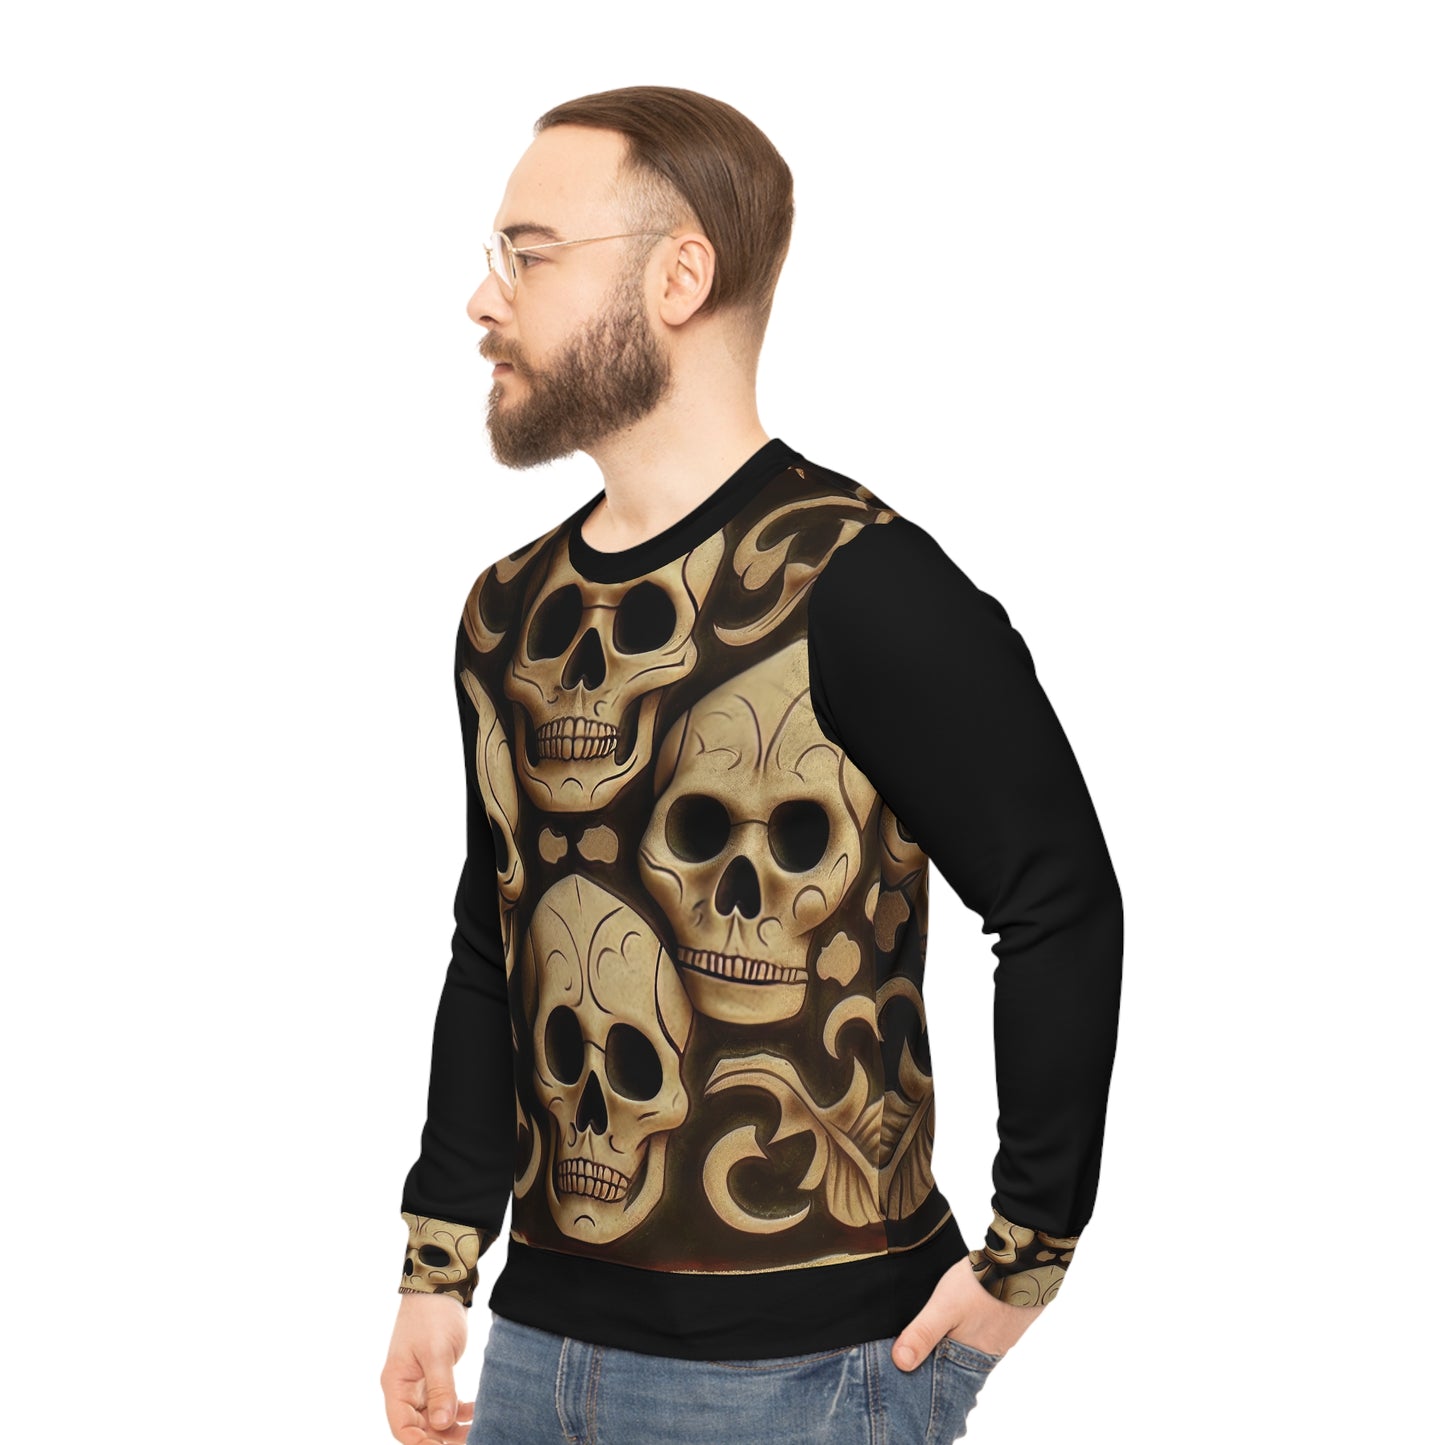 Metallic Chrome Skulls and classic Designed Background Style 16 Lightweight Sweatshirt (AOP)